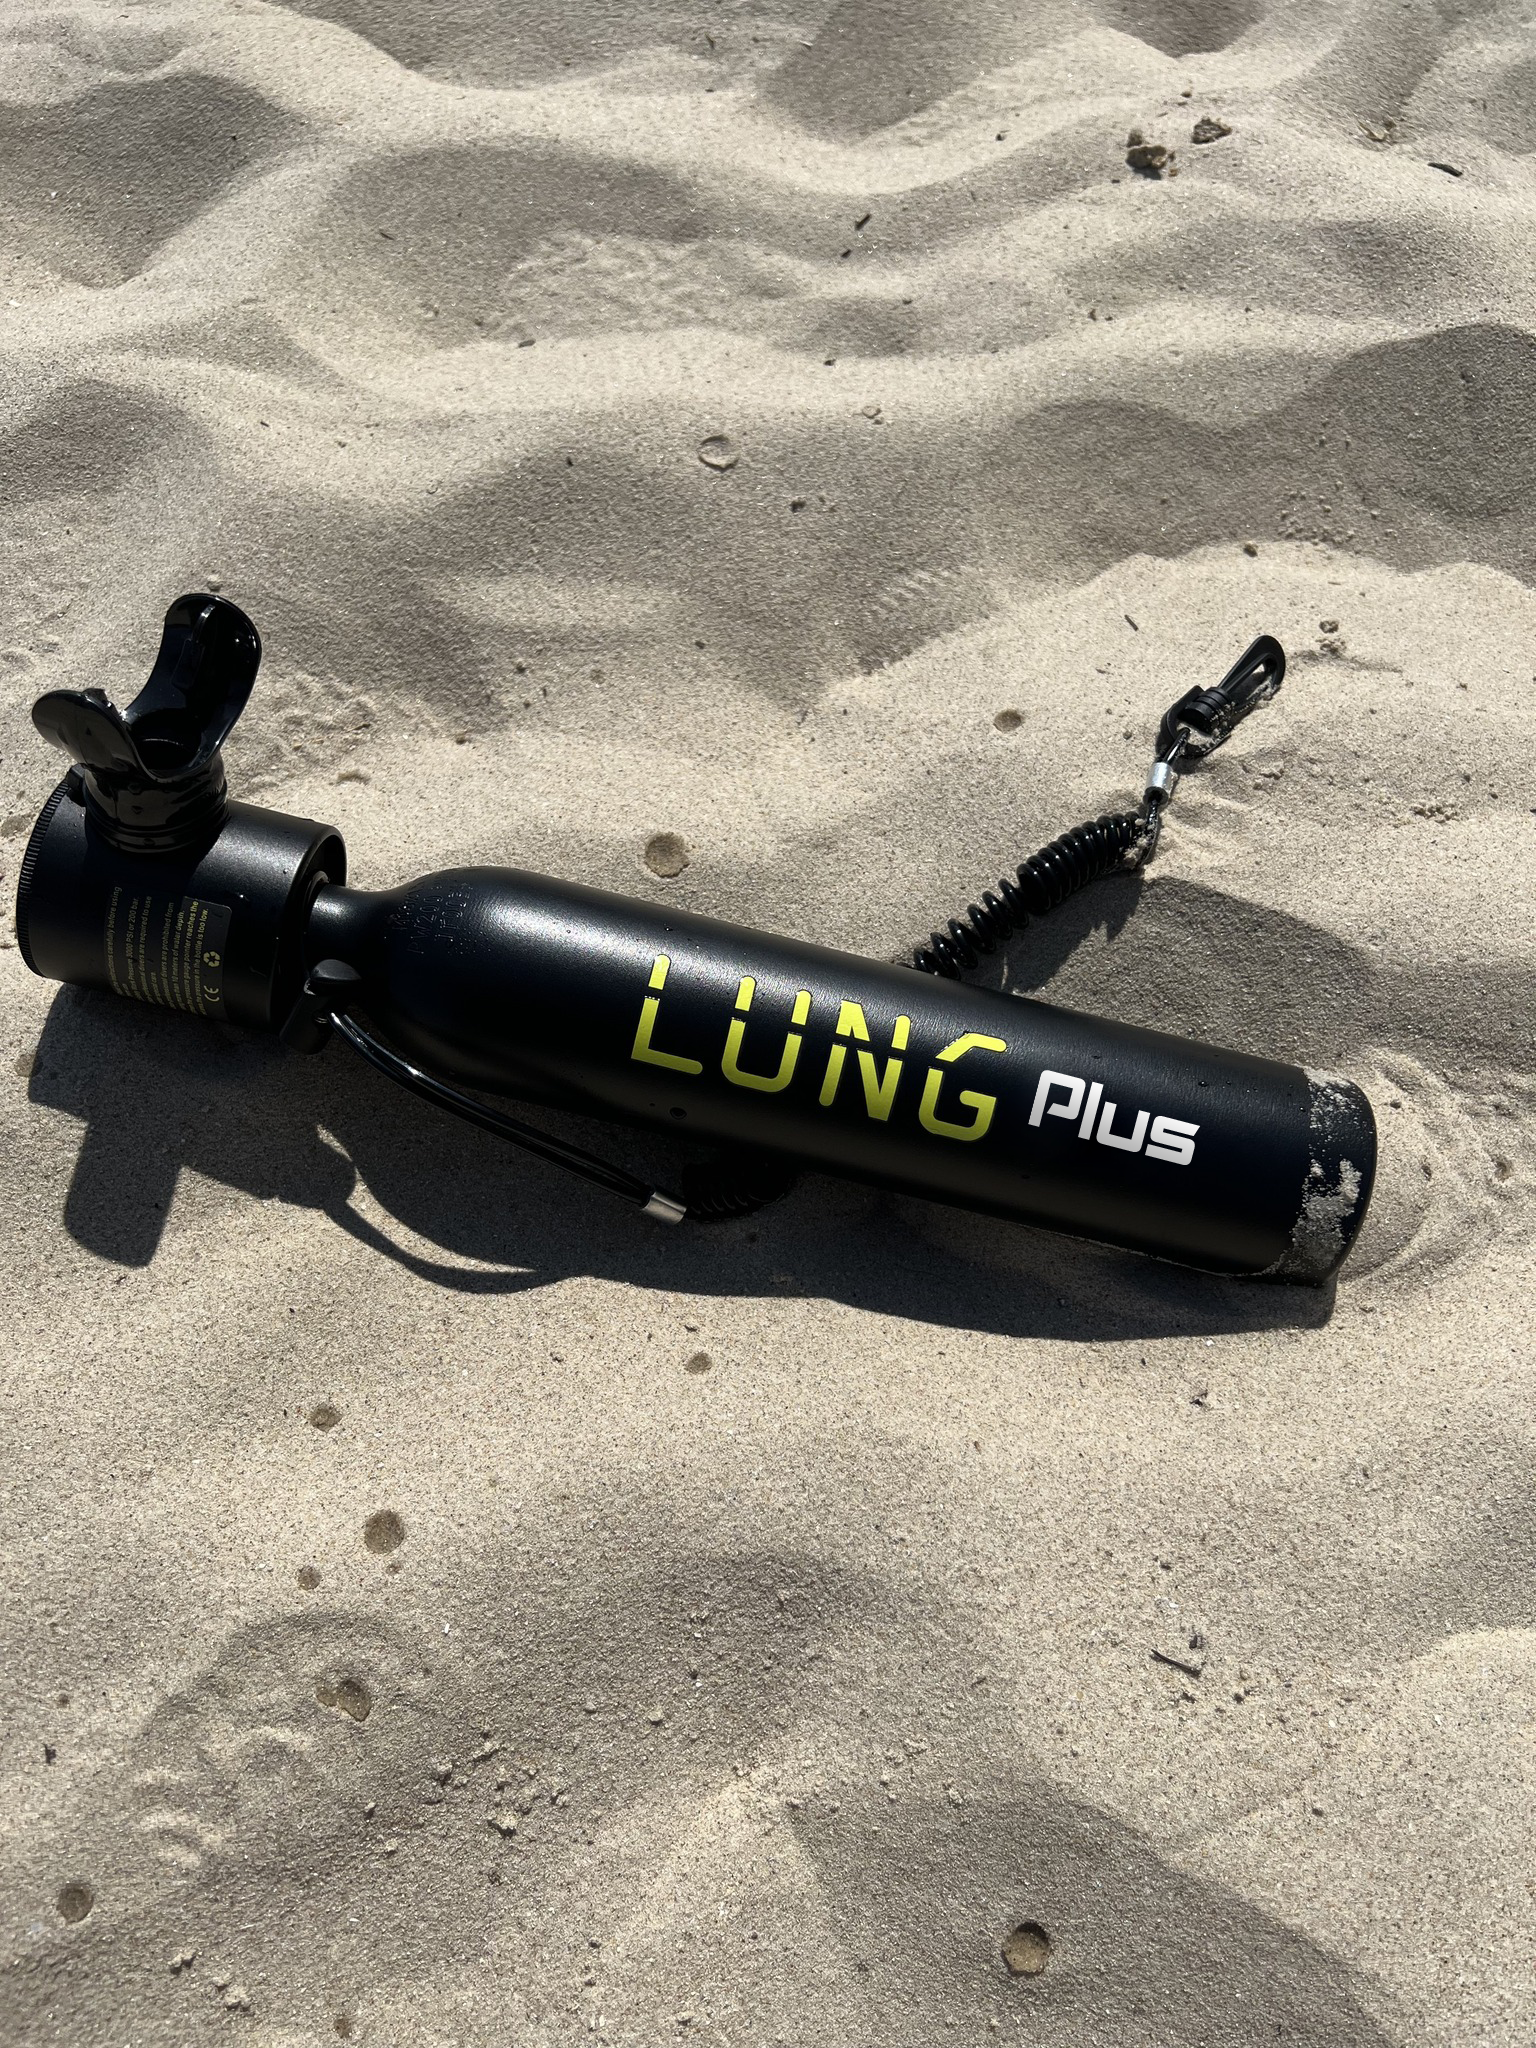 Lung Plus  - Scuba Oxigen Tank for Underwater Adventurers